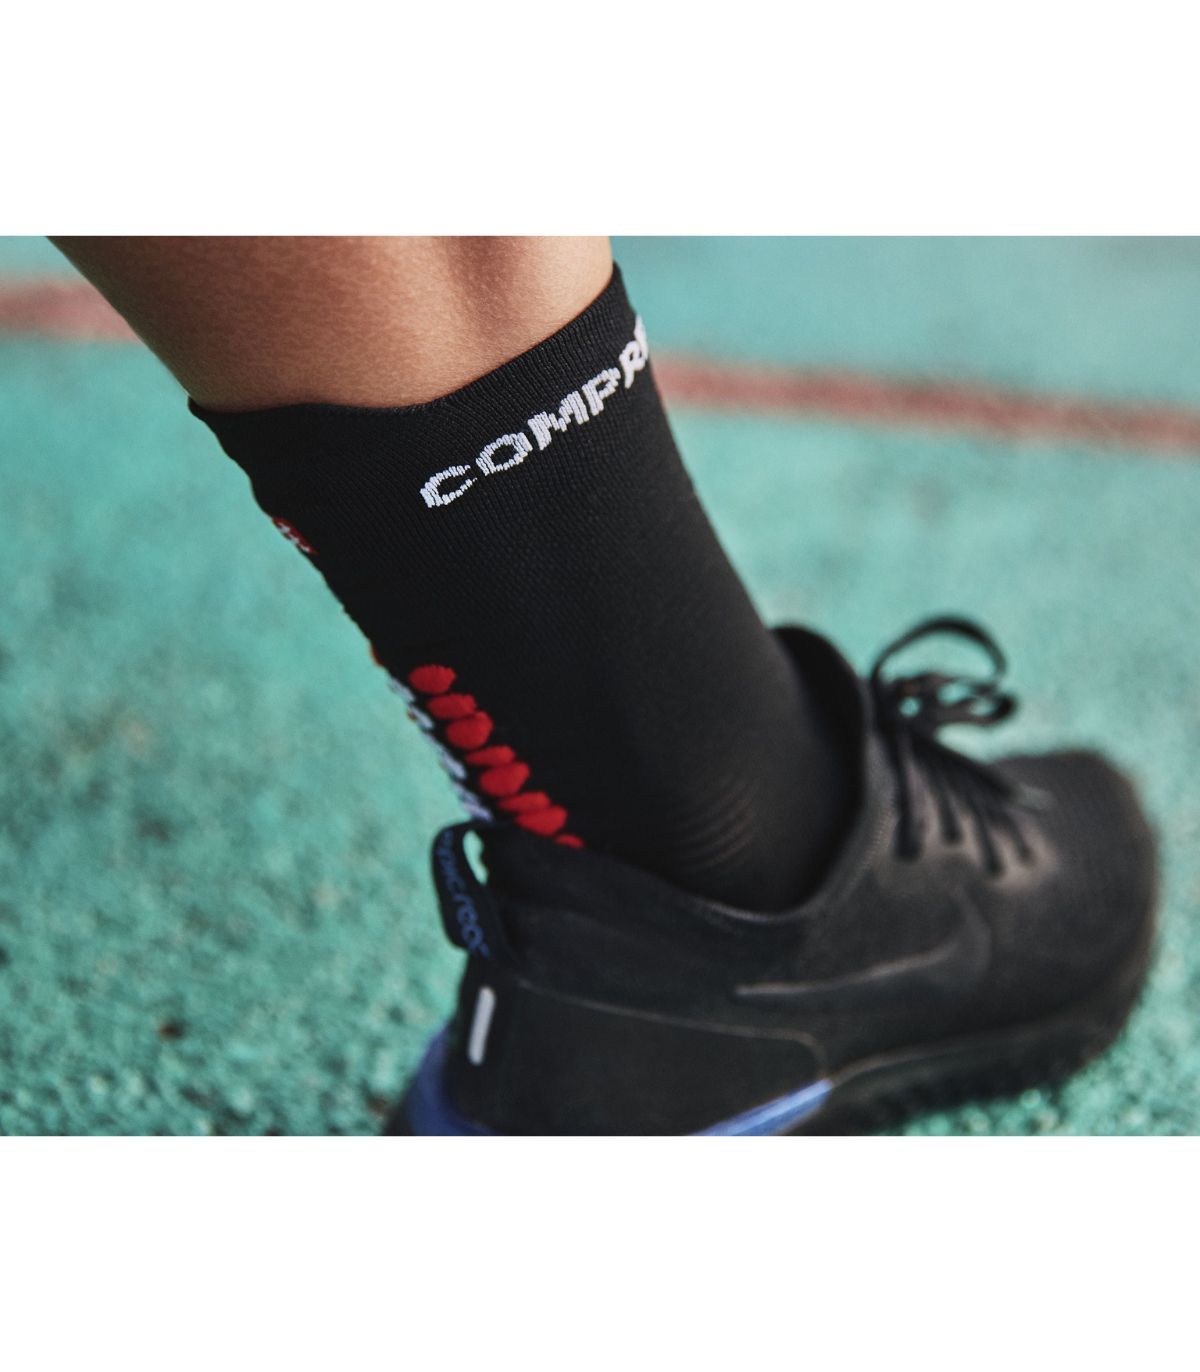 Calcetines Compressport Pro Racing Socks v4.0 Run Low 